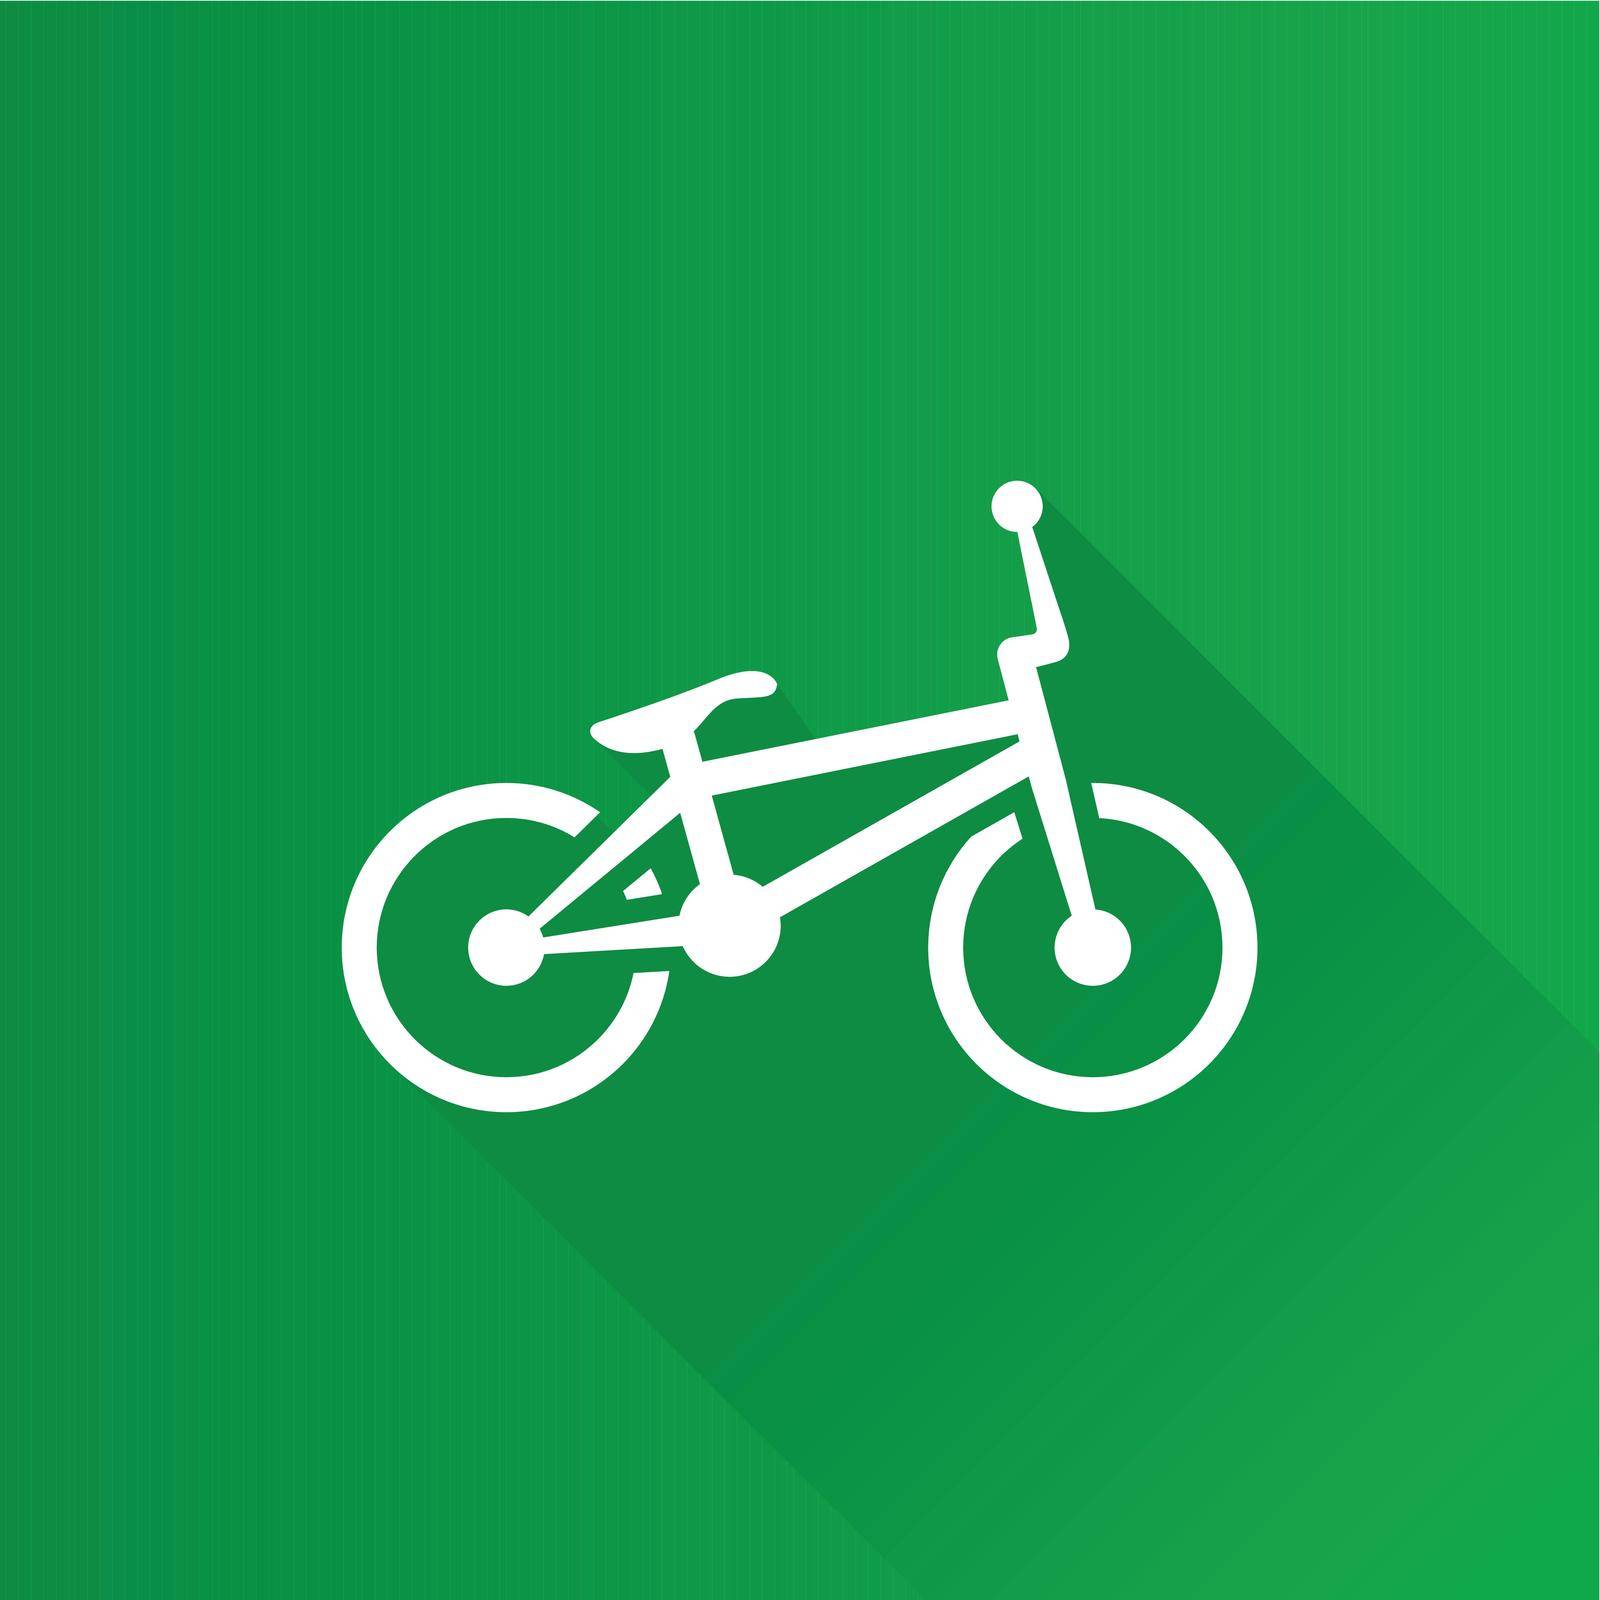 Metro Icon - BMX bicycle by puruan